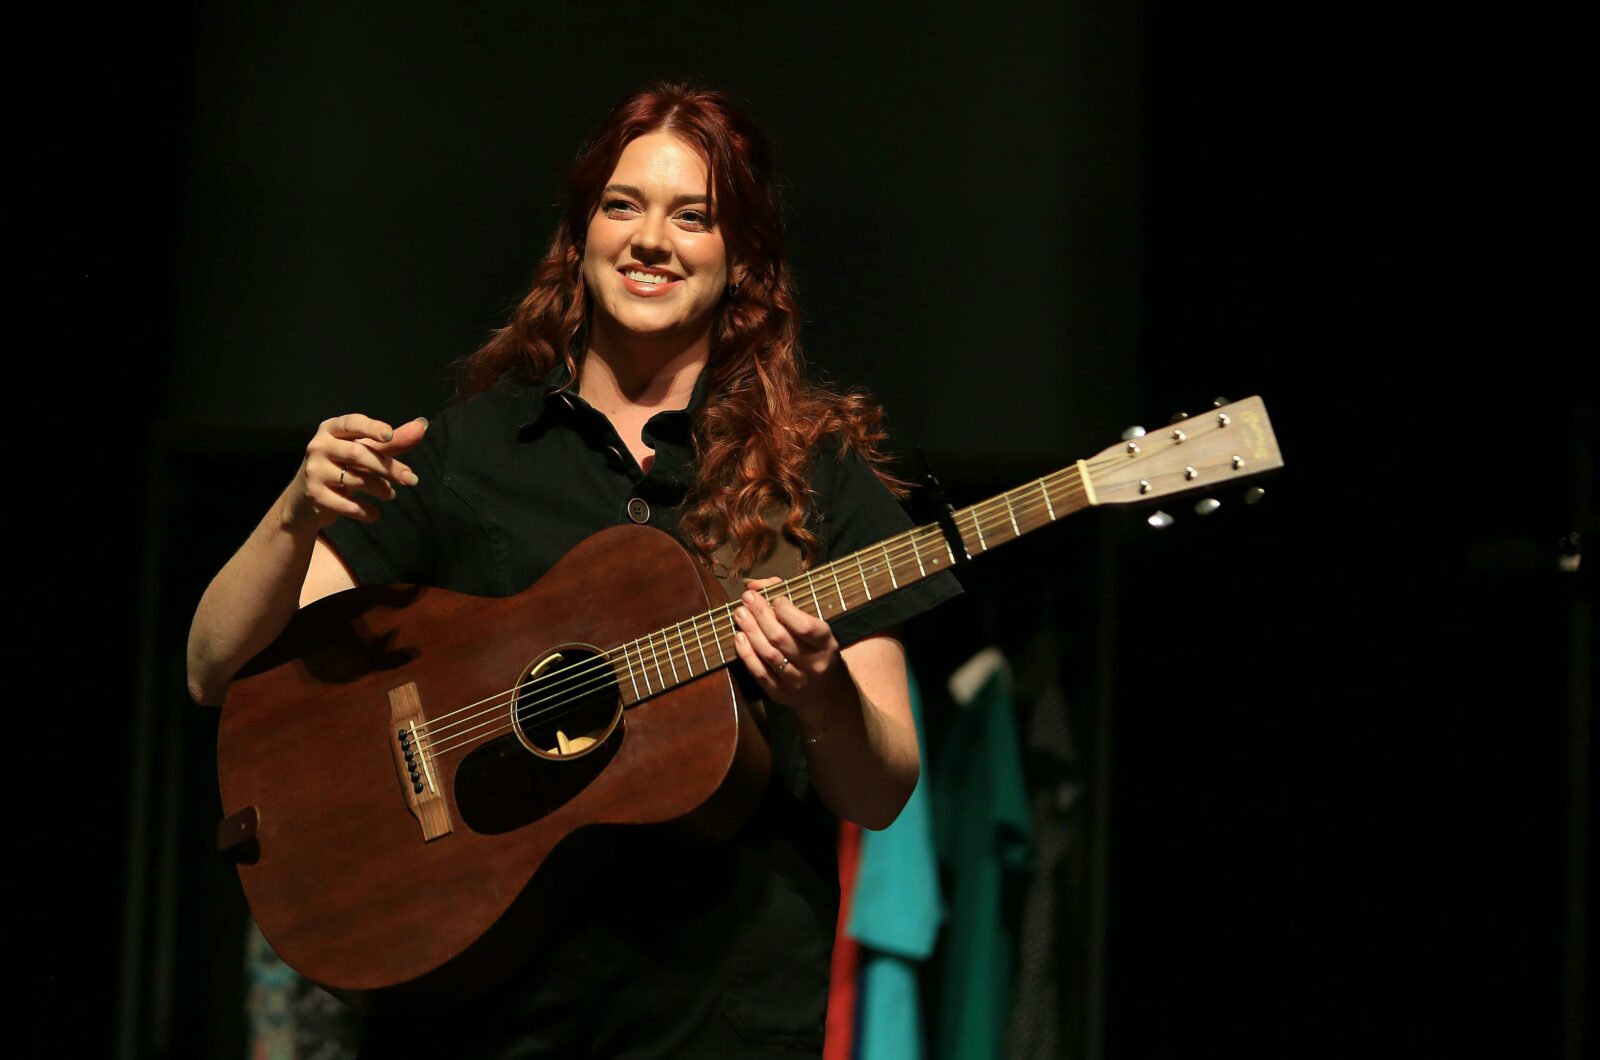 woman playing guitar